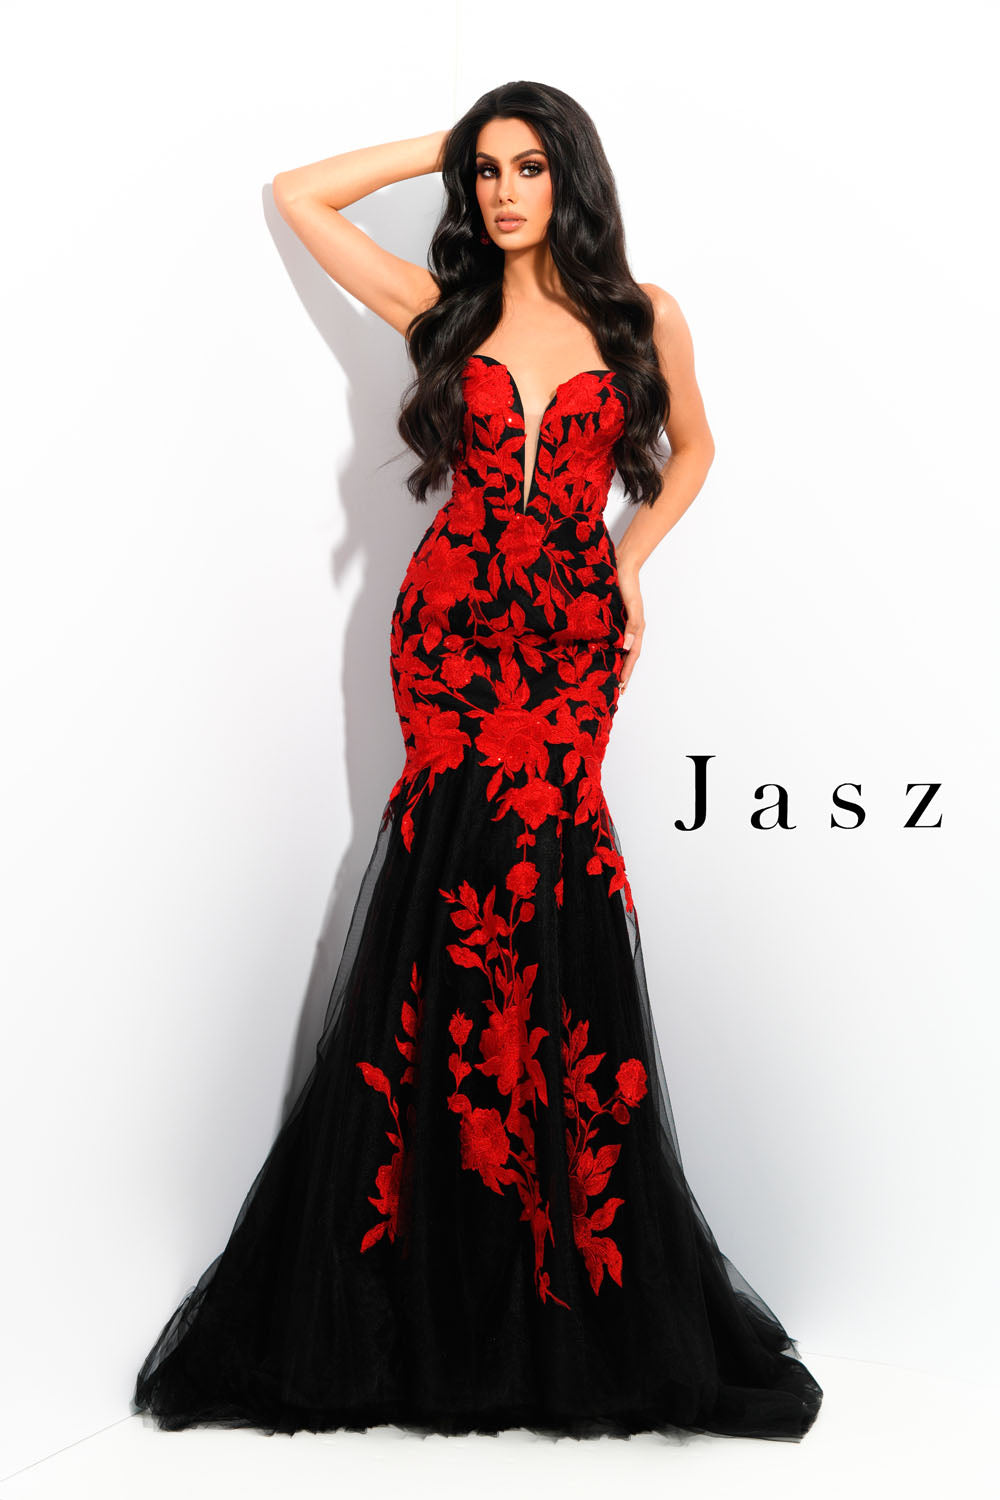 Jennifer Lawrence's red and black dress is giving us flamenco dancer vibes  - HelloGigglesHelloGiggles